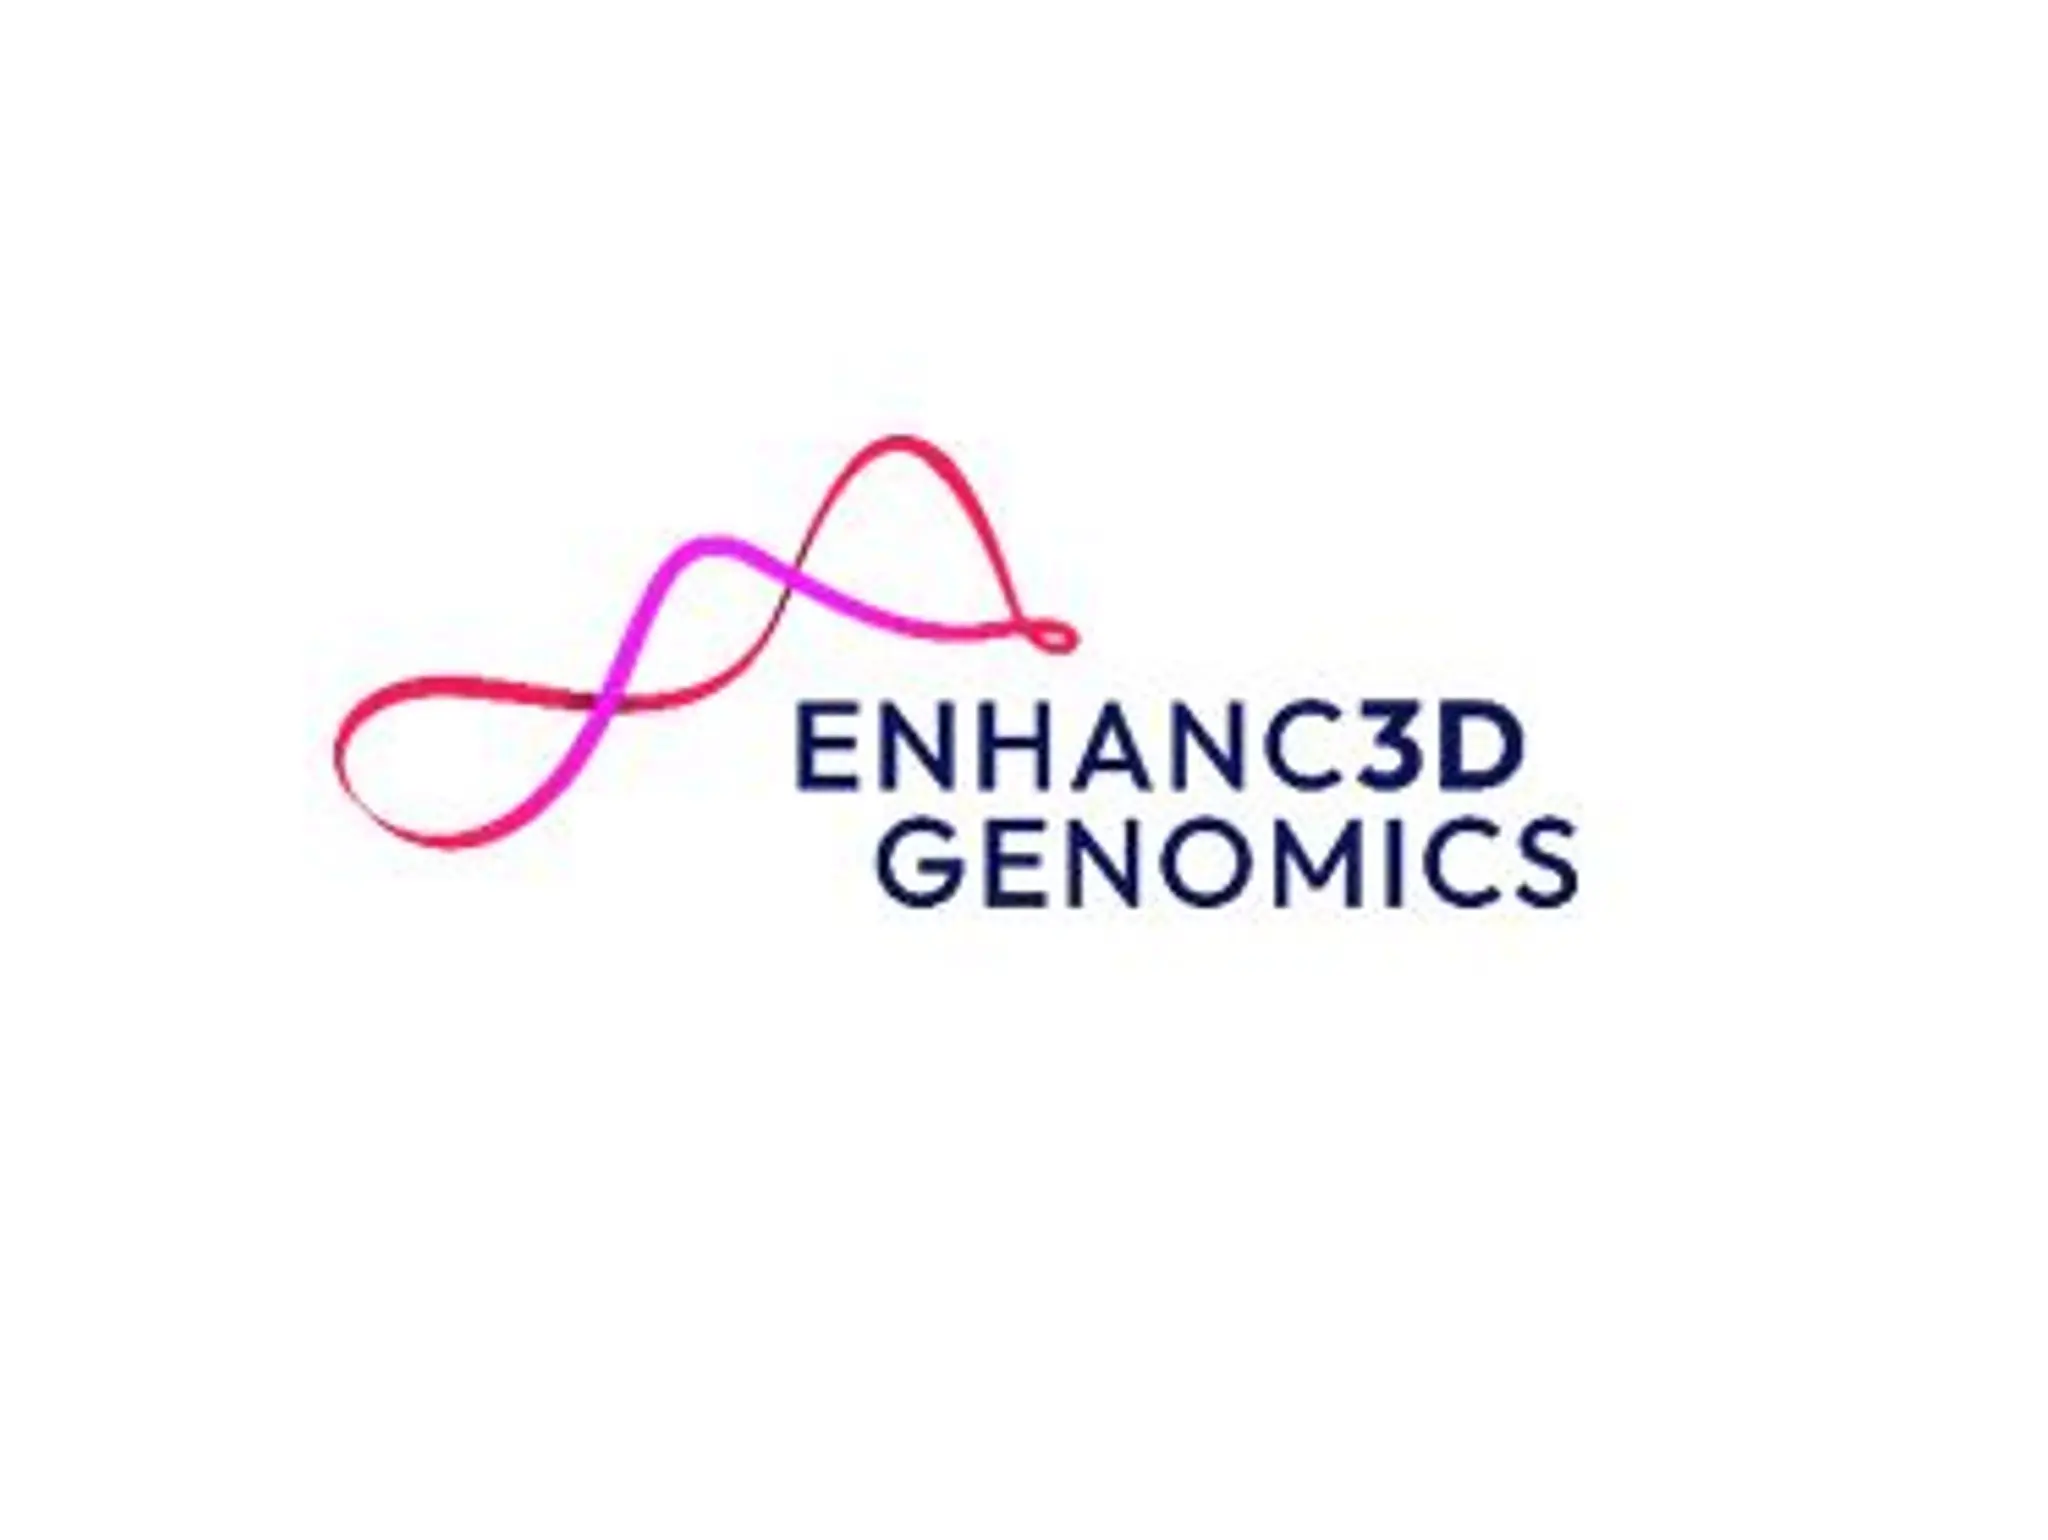 Enhanc3D Genomics appoints Dr Daniel Turner as Chief Scientific Officer